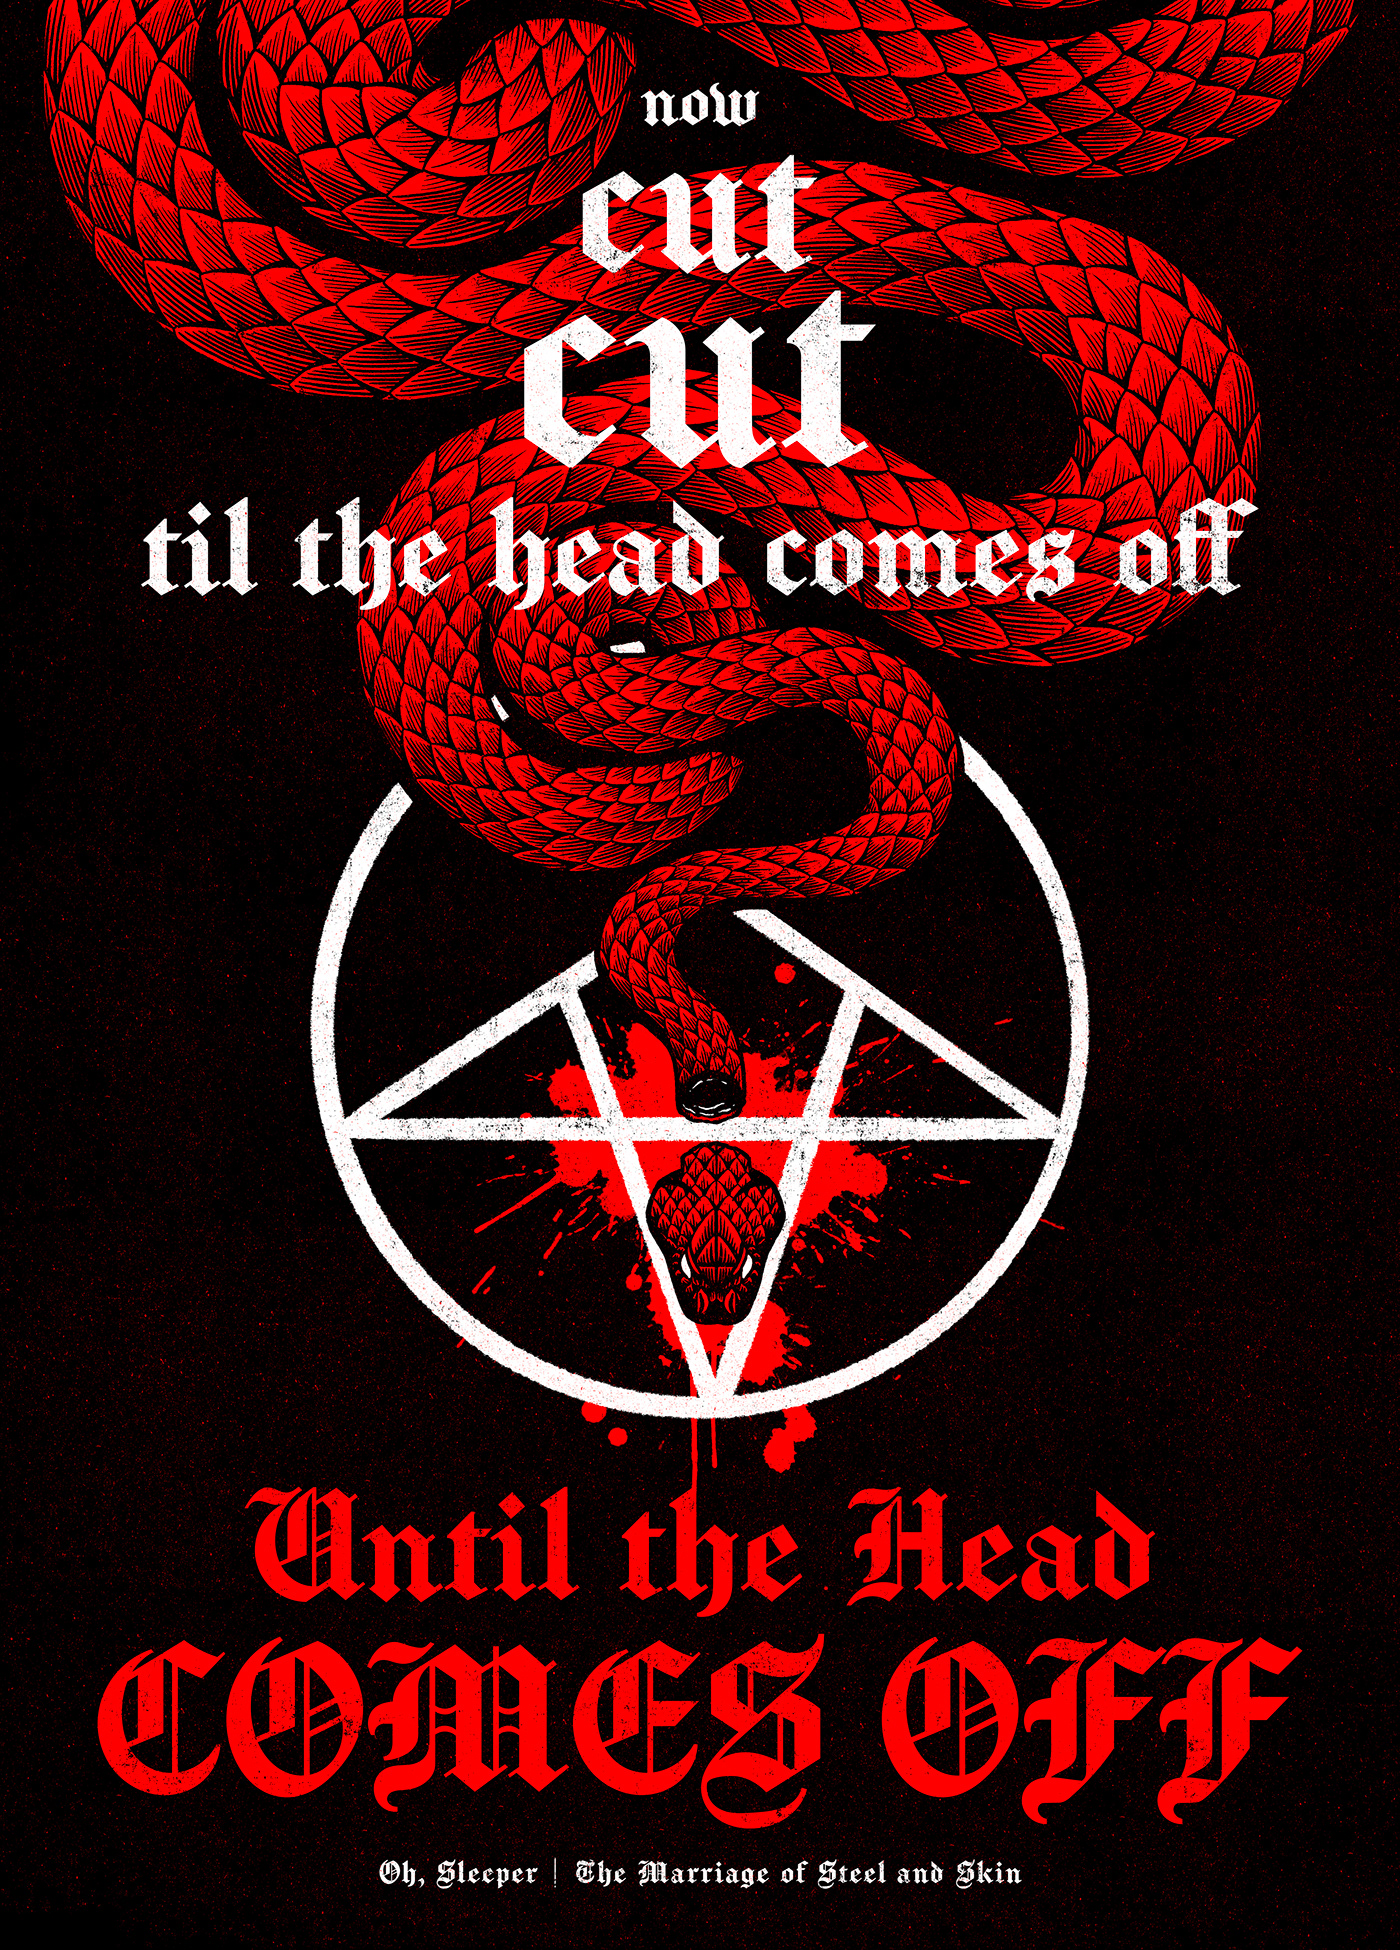 Hardcore Metalcore Heavy brutal Christian snake Viper ink illustration blood oh sleeper